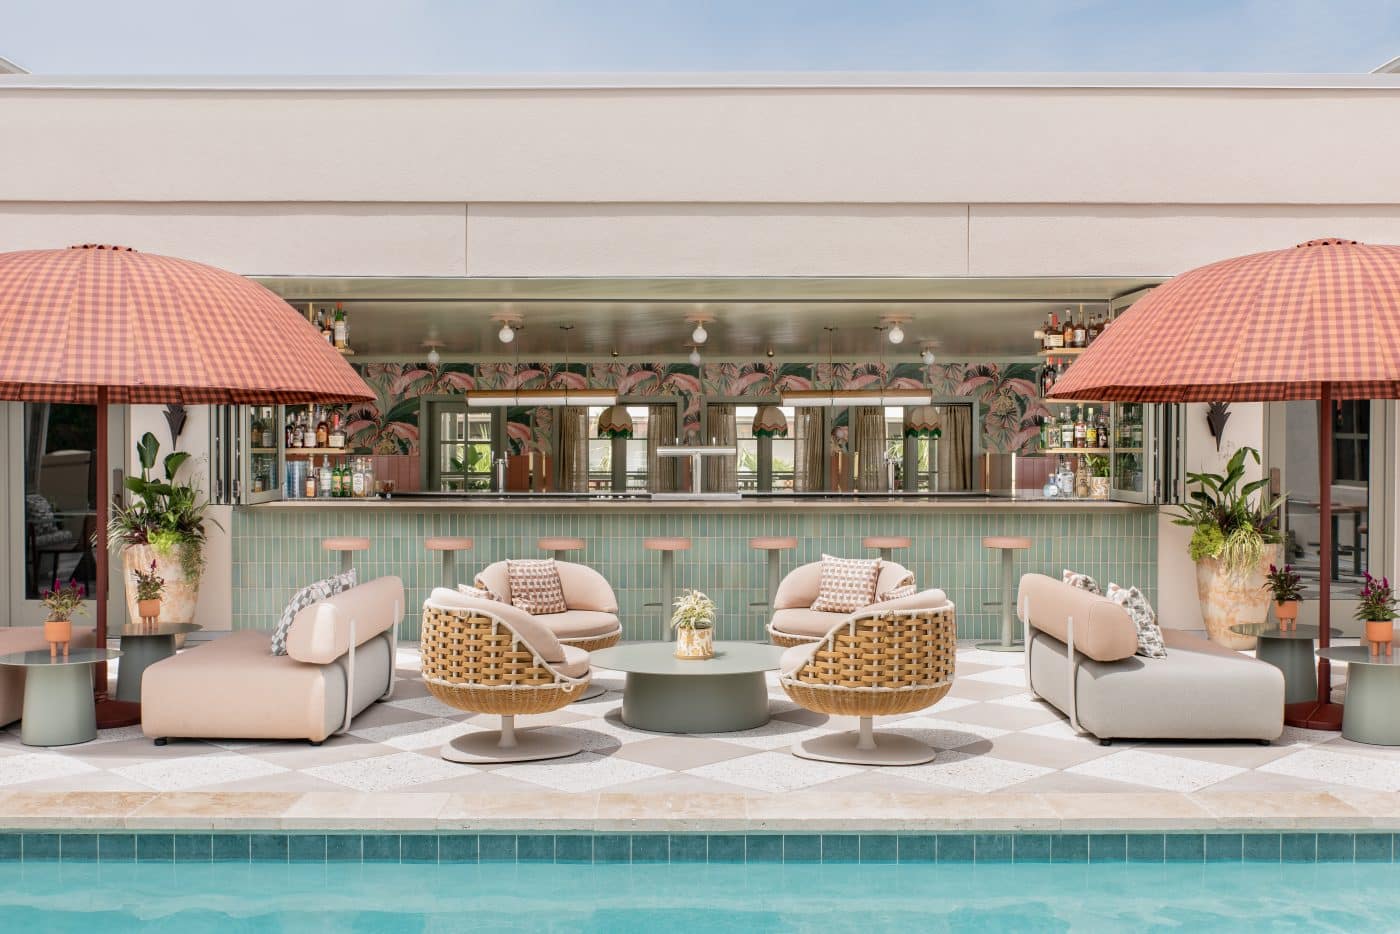 Pool deck at The Ryder Hotel designed by Cortney Bishop